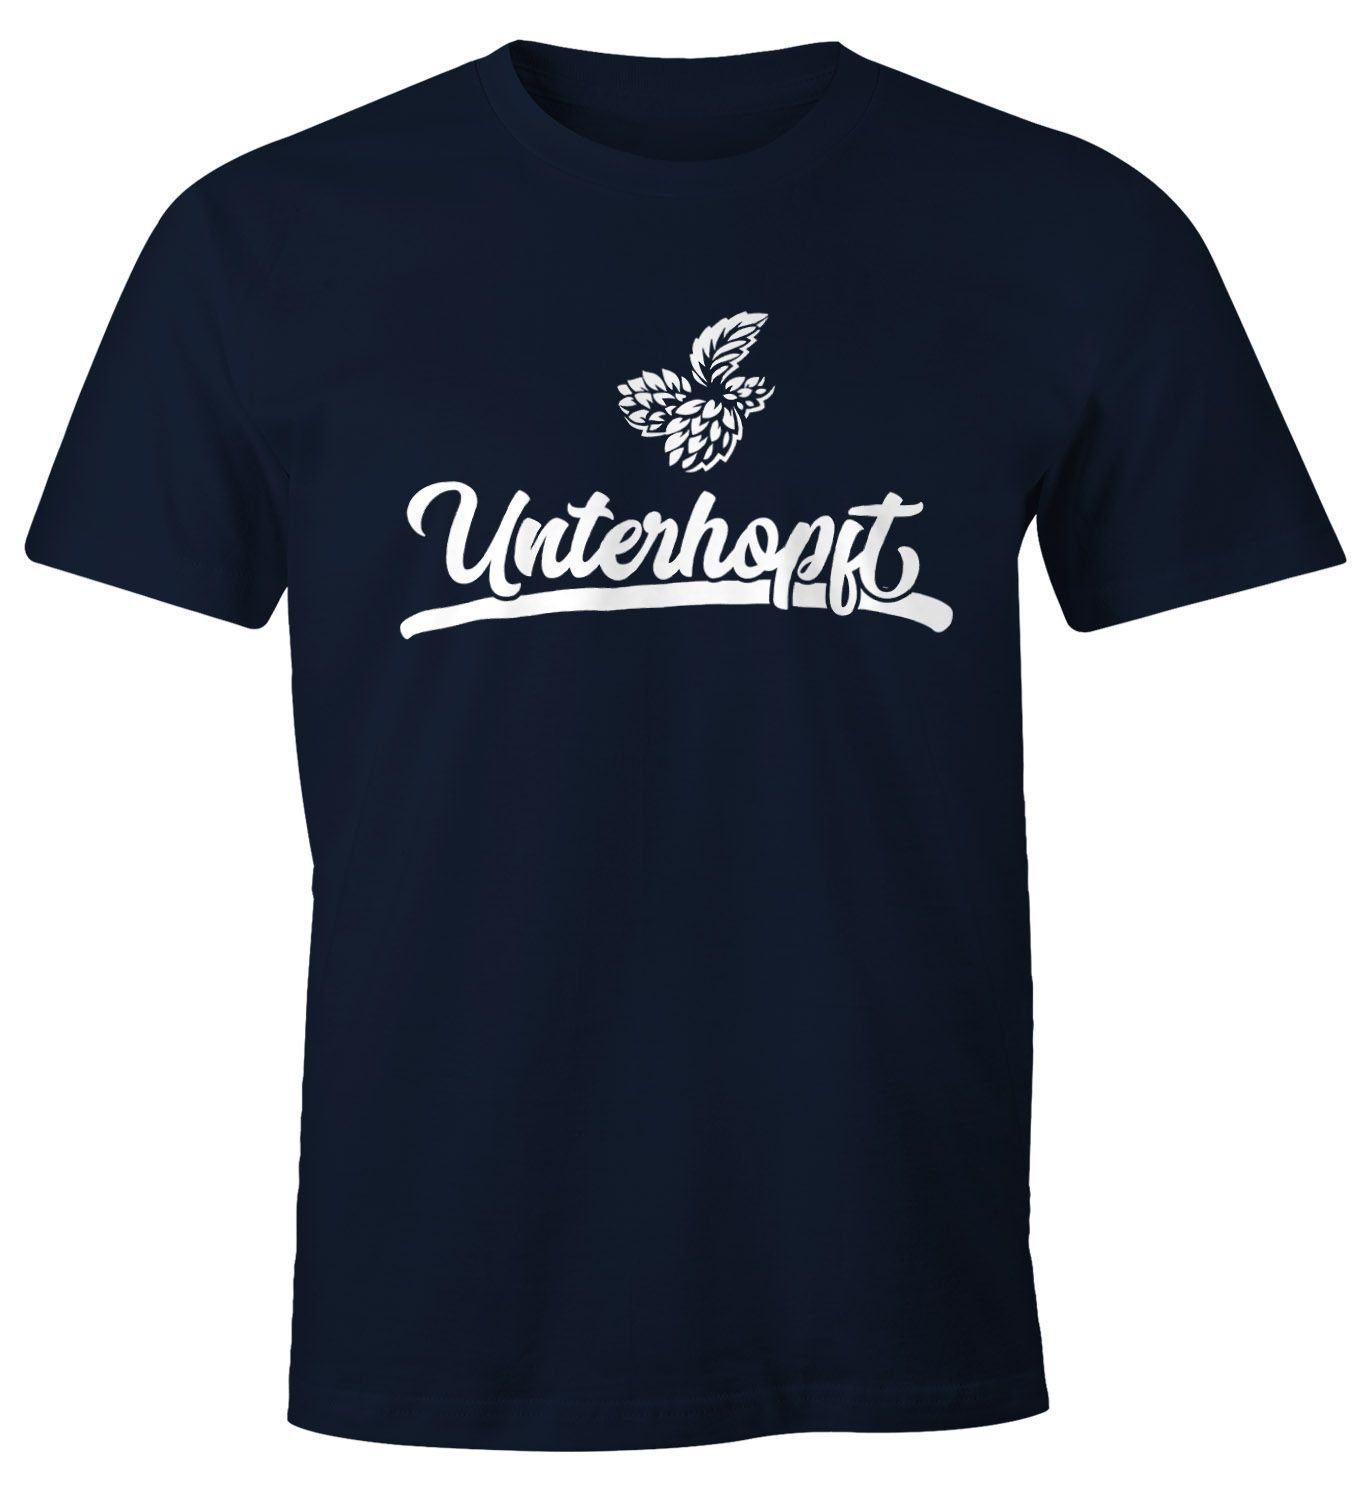 MoonWorks Print-Shirt Herren Party T-Shirt Unterhopft Bier Fun-Shirt Moonworks® mit Print navy | T-Shirts